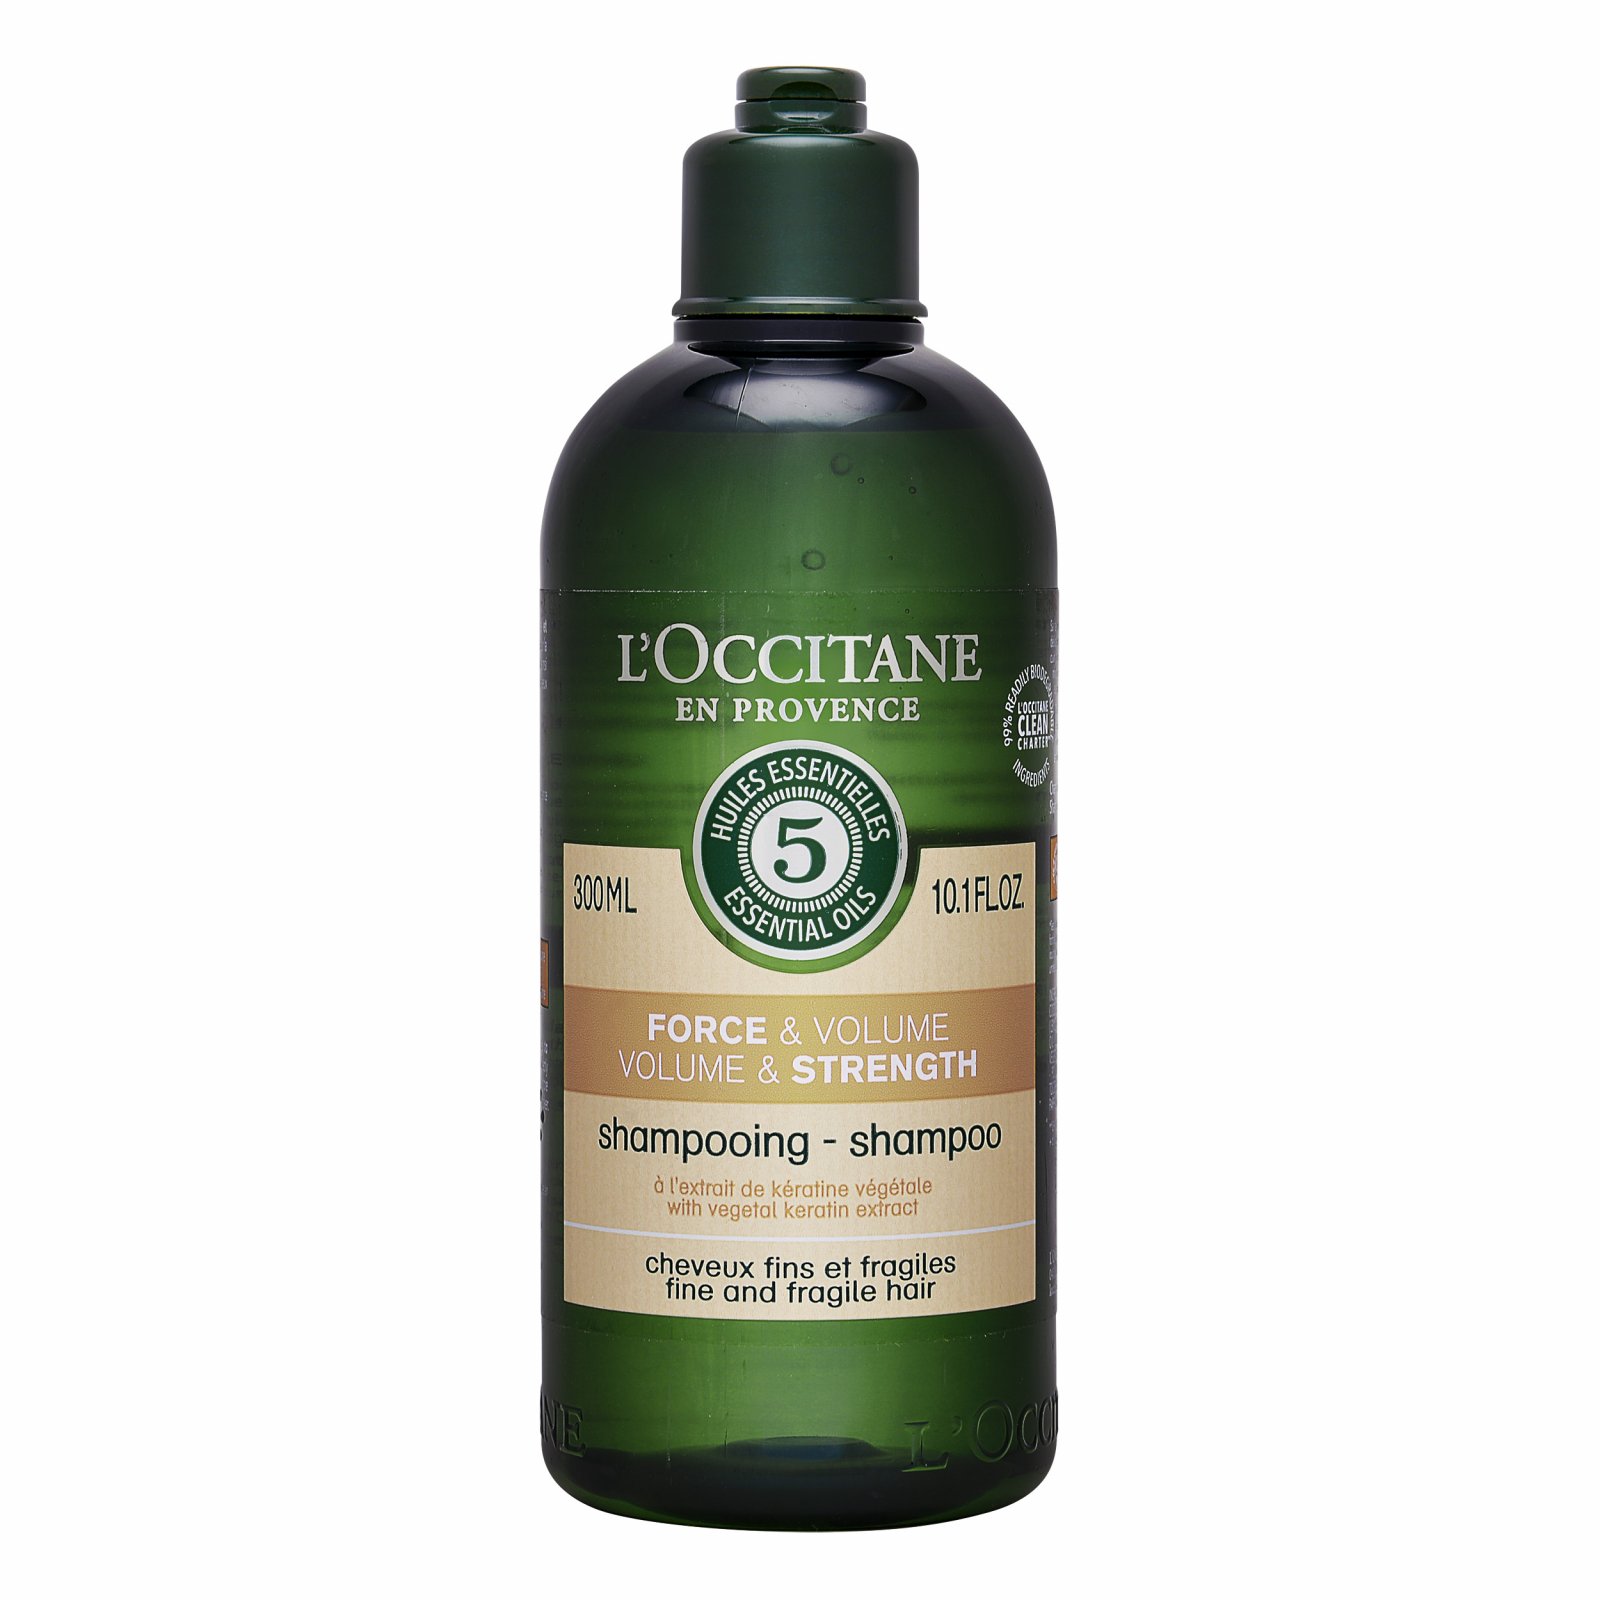 Loccitane Volume & Strength Shampoo 300ml with 5 Essential Oils ...